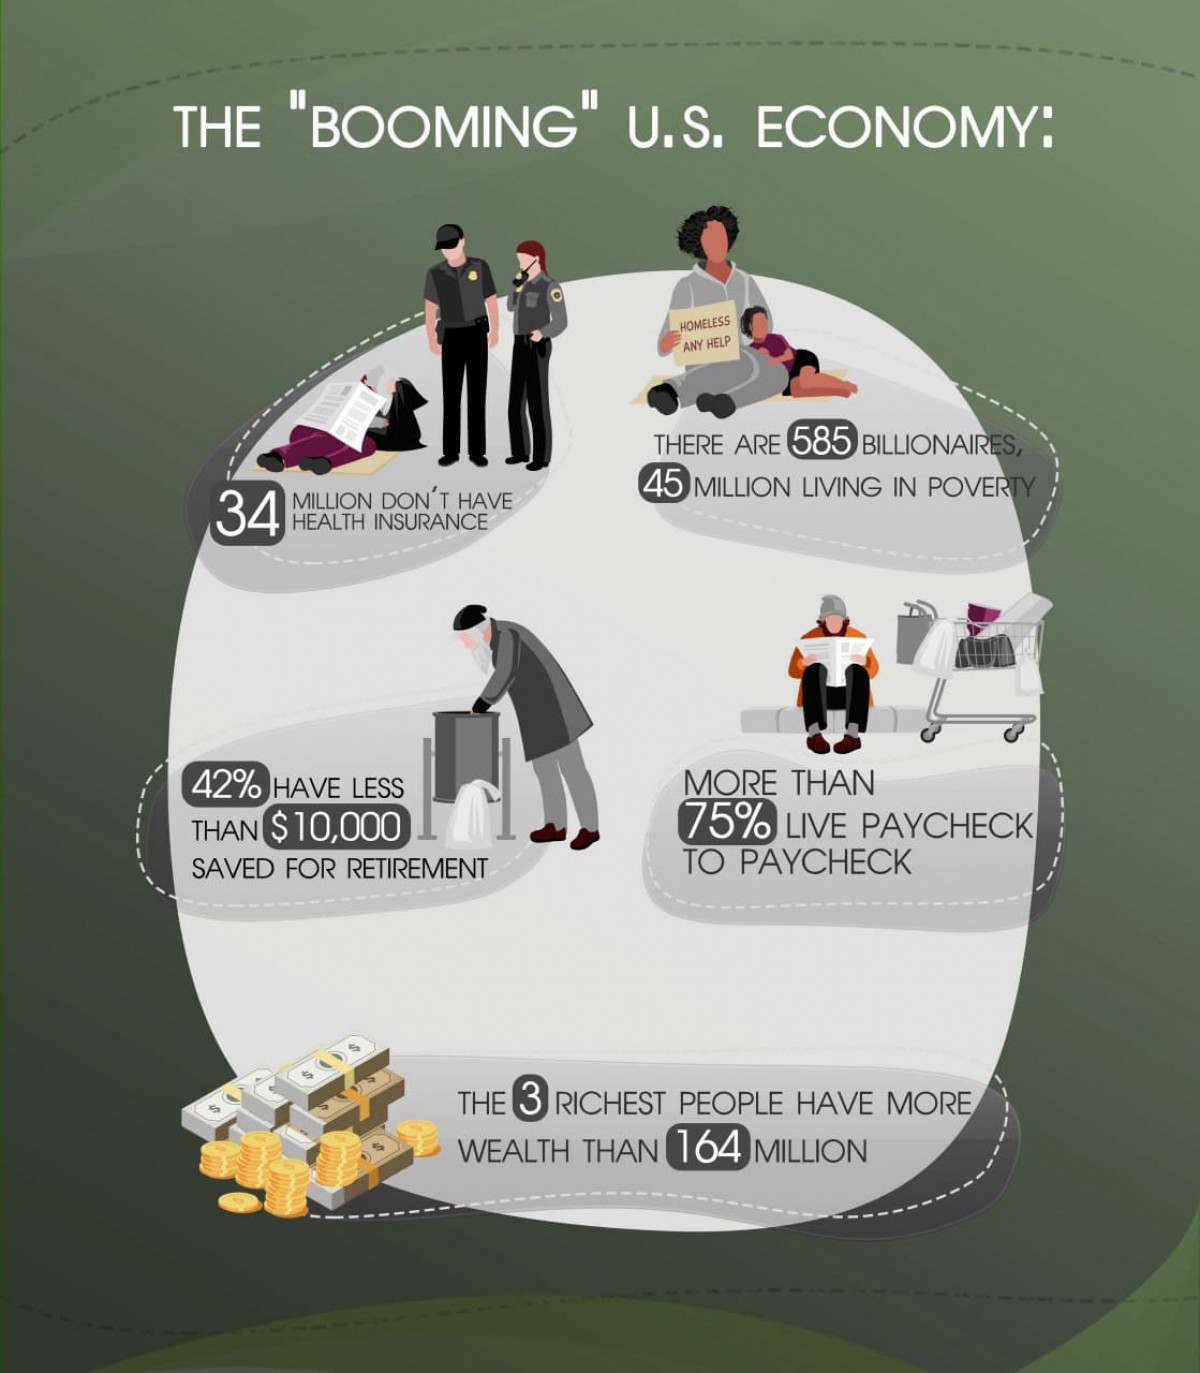 THE "BOOMING" U.S. ECONOMY